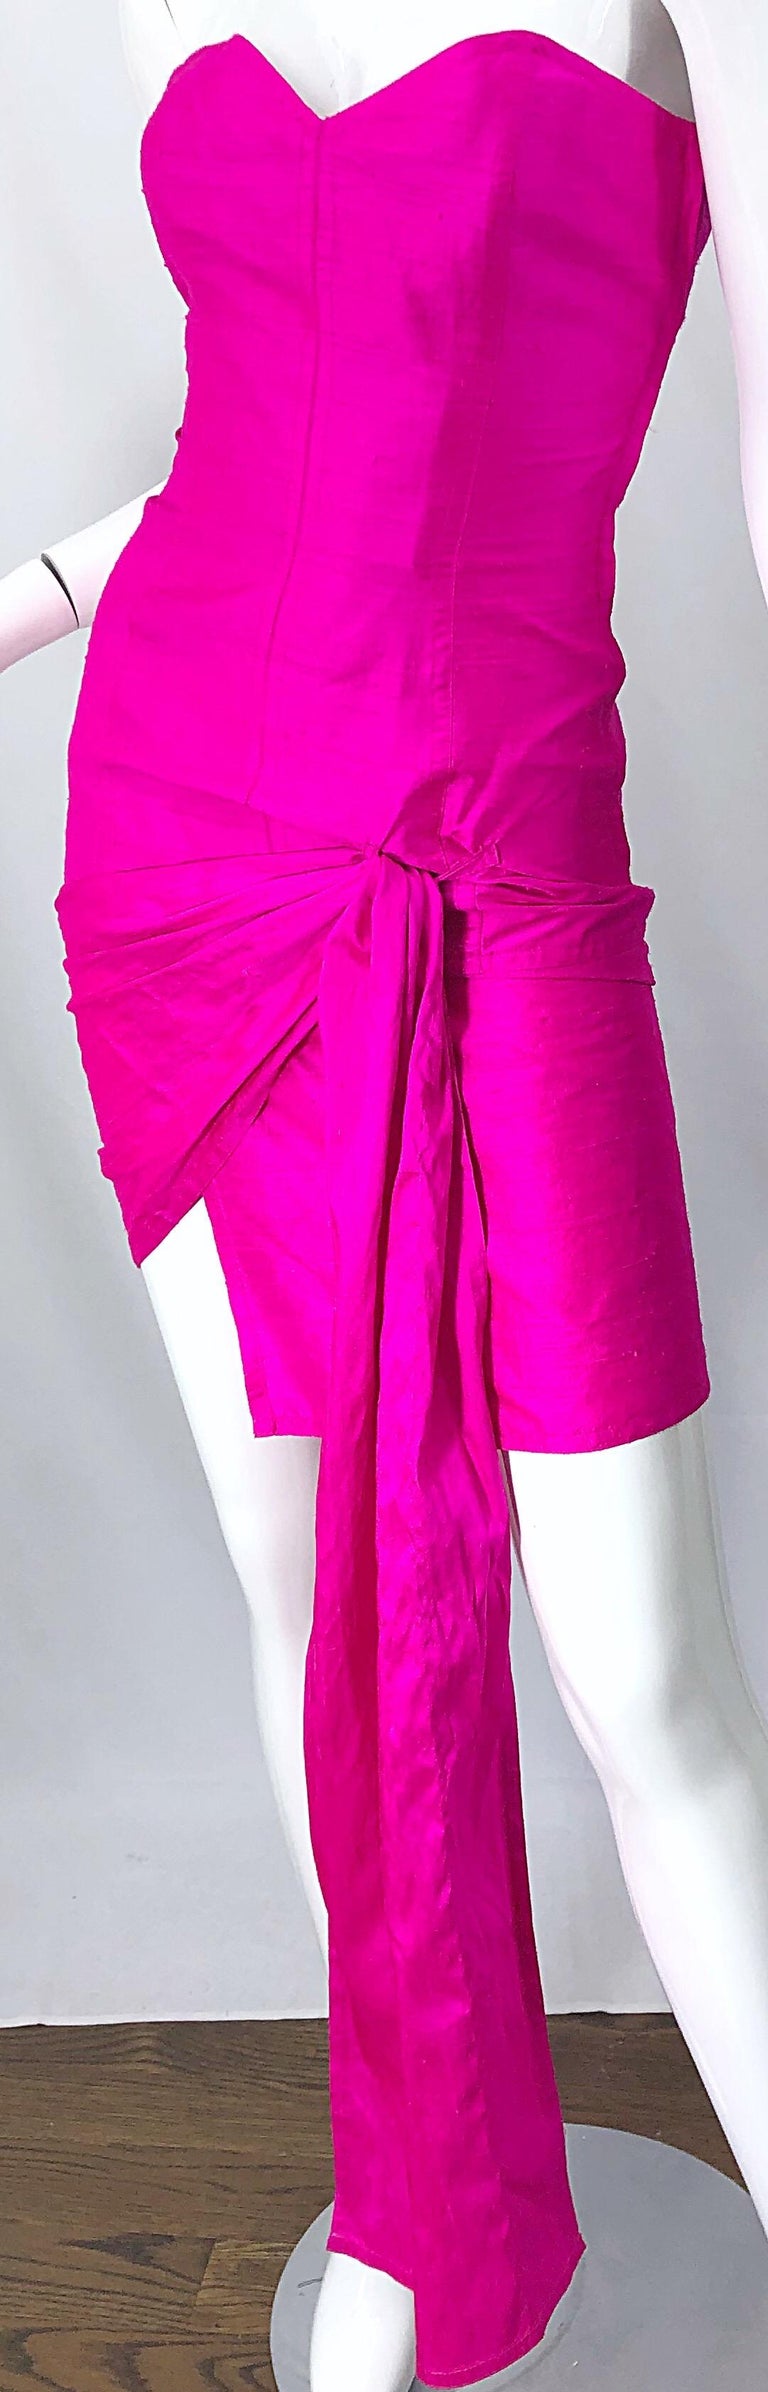 1980s Angelo Tarlazzi Shocking Hot Pink Avant Garde Silk Shantung Vintage Dress For Sale 5